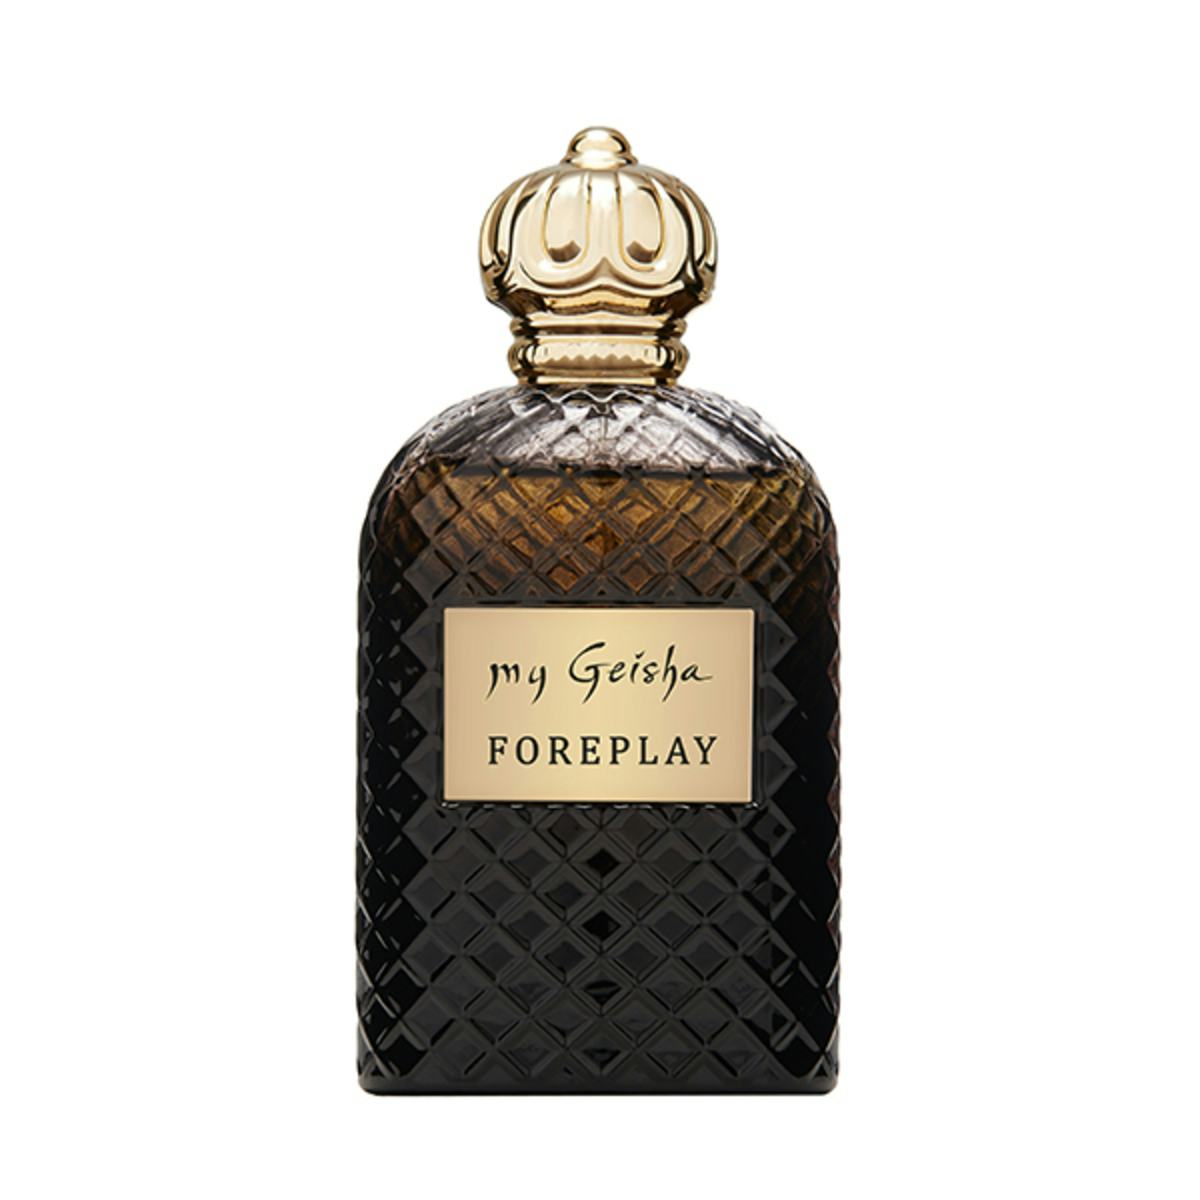 Estratto di profumo "Foreplay" 100 ml, My Geisha Genève, Genève, image 1 | Mimelis